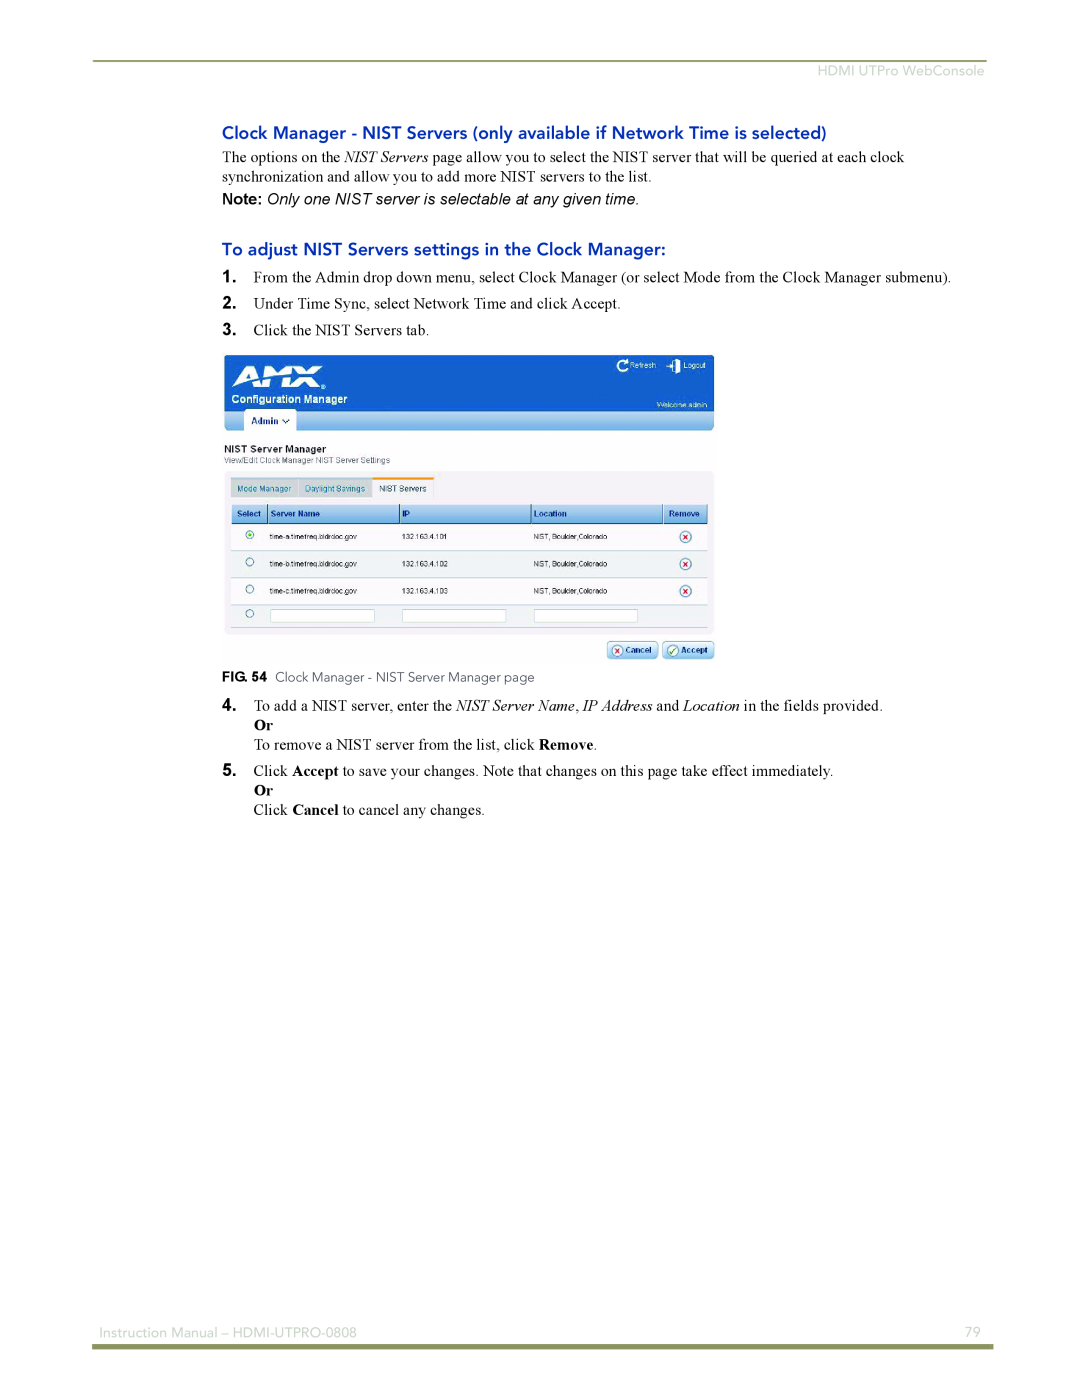 AMX HDMI-UTPRO-0808 instruction manual Click the NIST Servers tab 